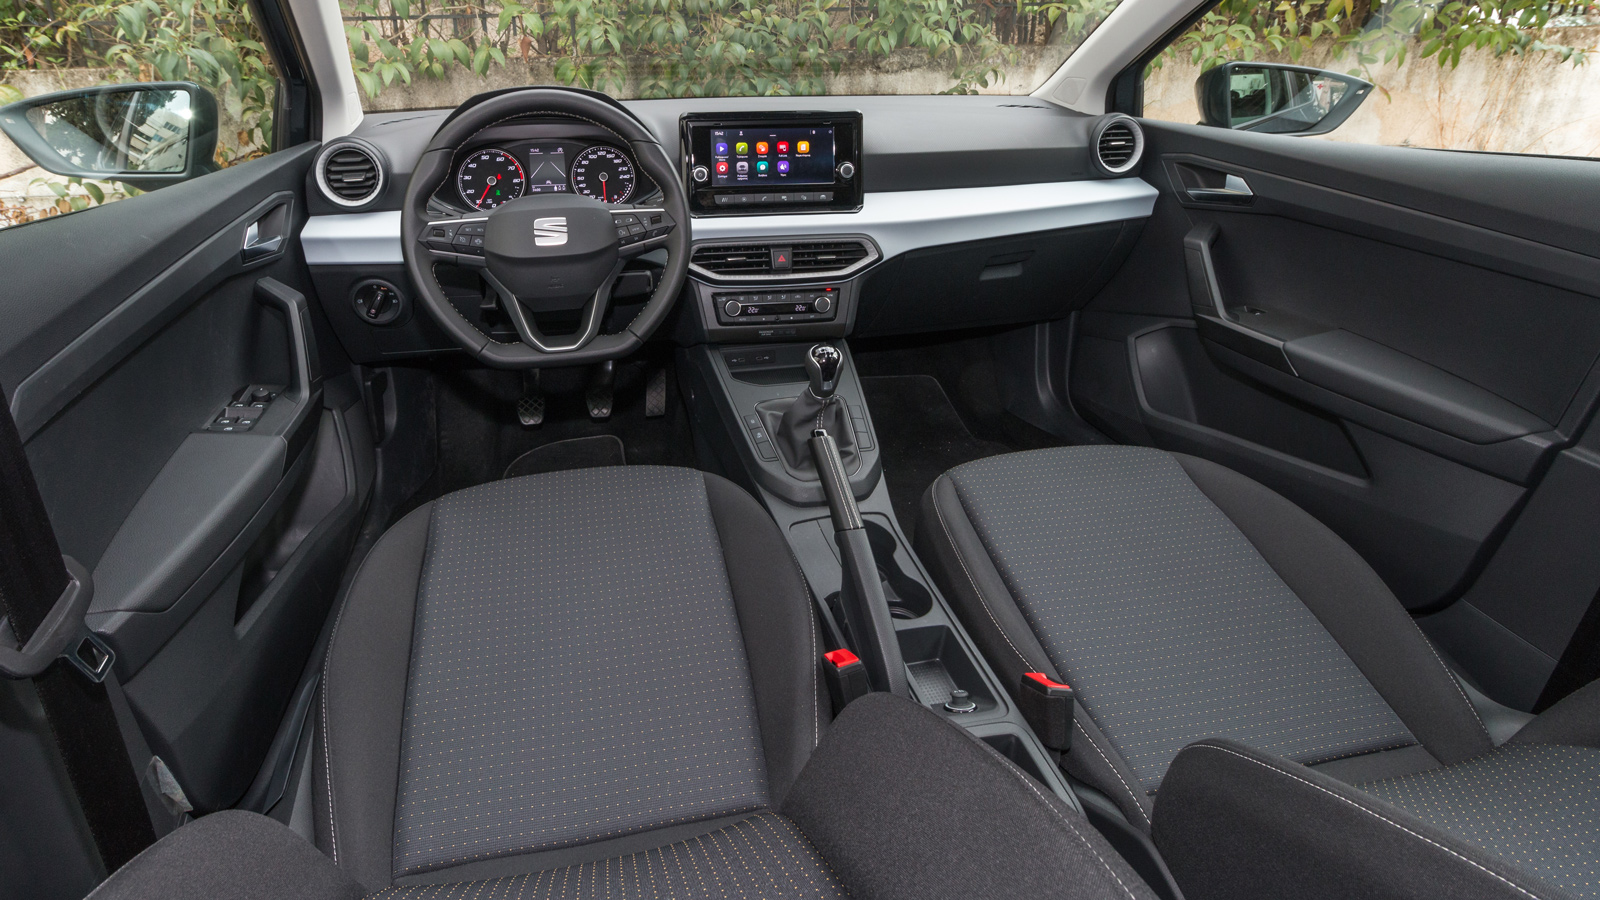 Nissan Micra VS Seat Ibiza: Ποιο ξεχωρίζει σε εξοπλισμό ασφαλείας και άνεσης;